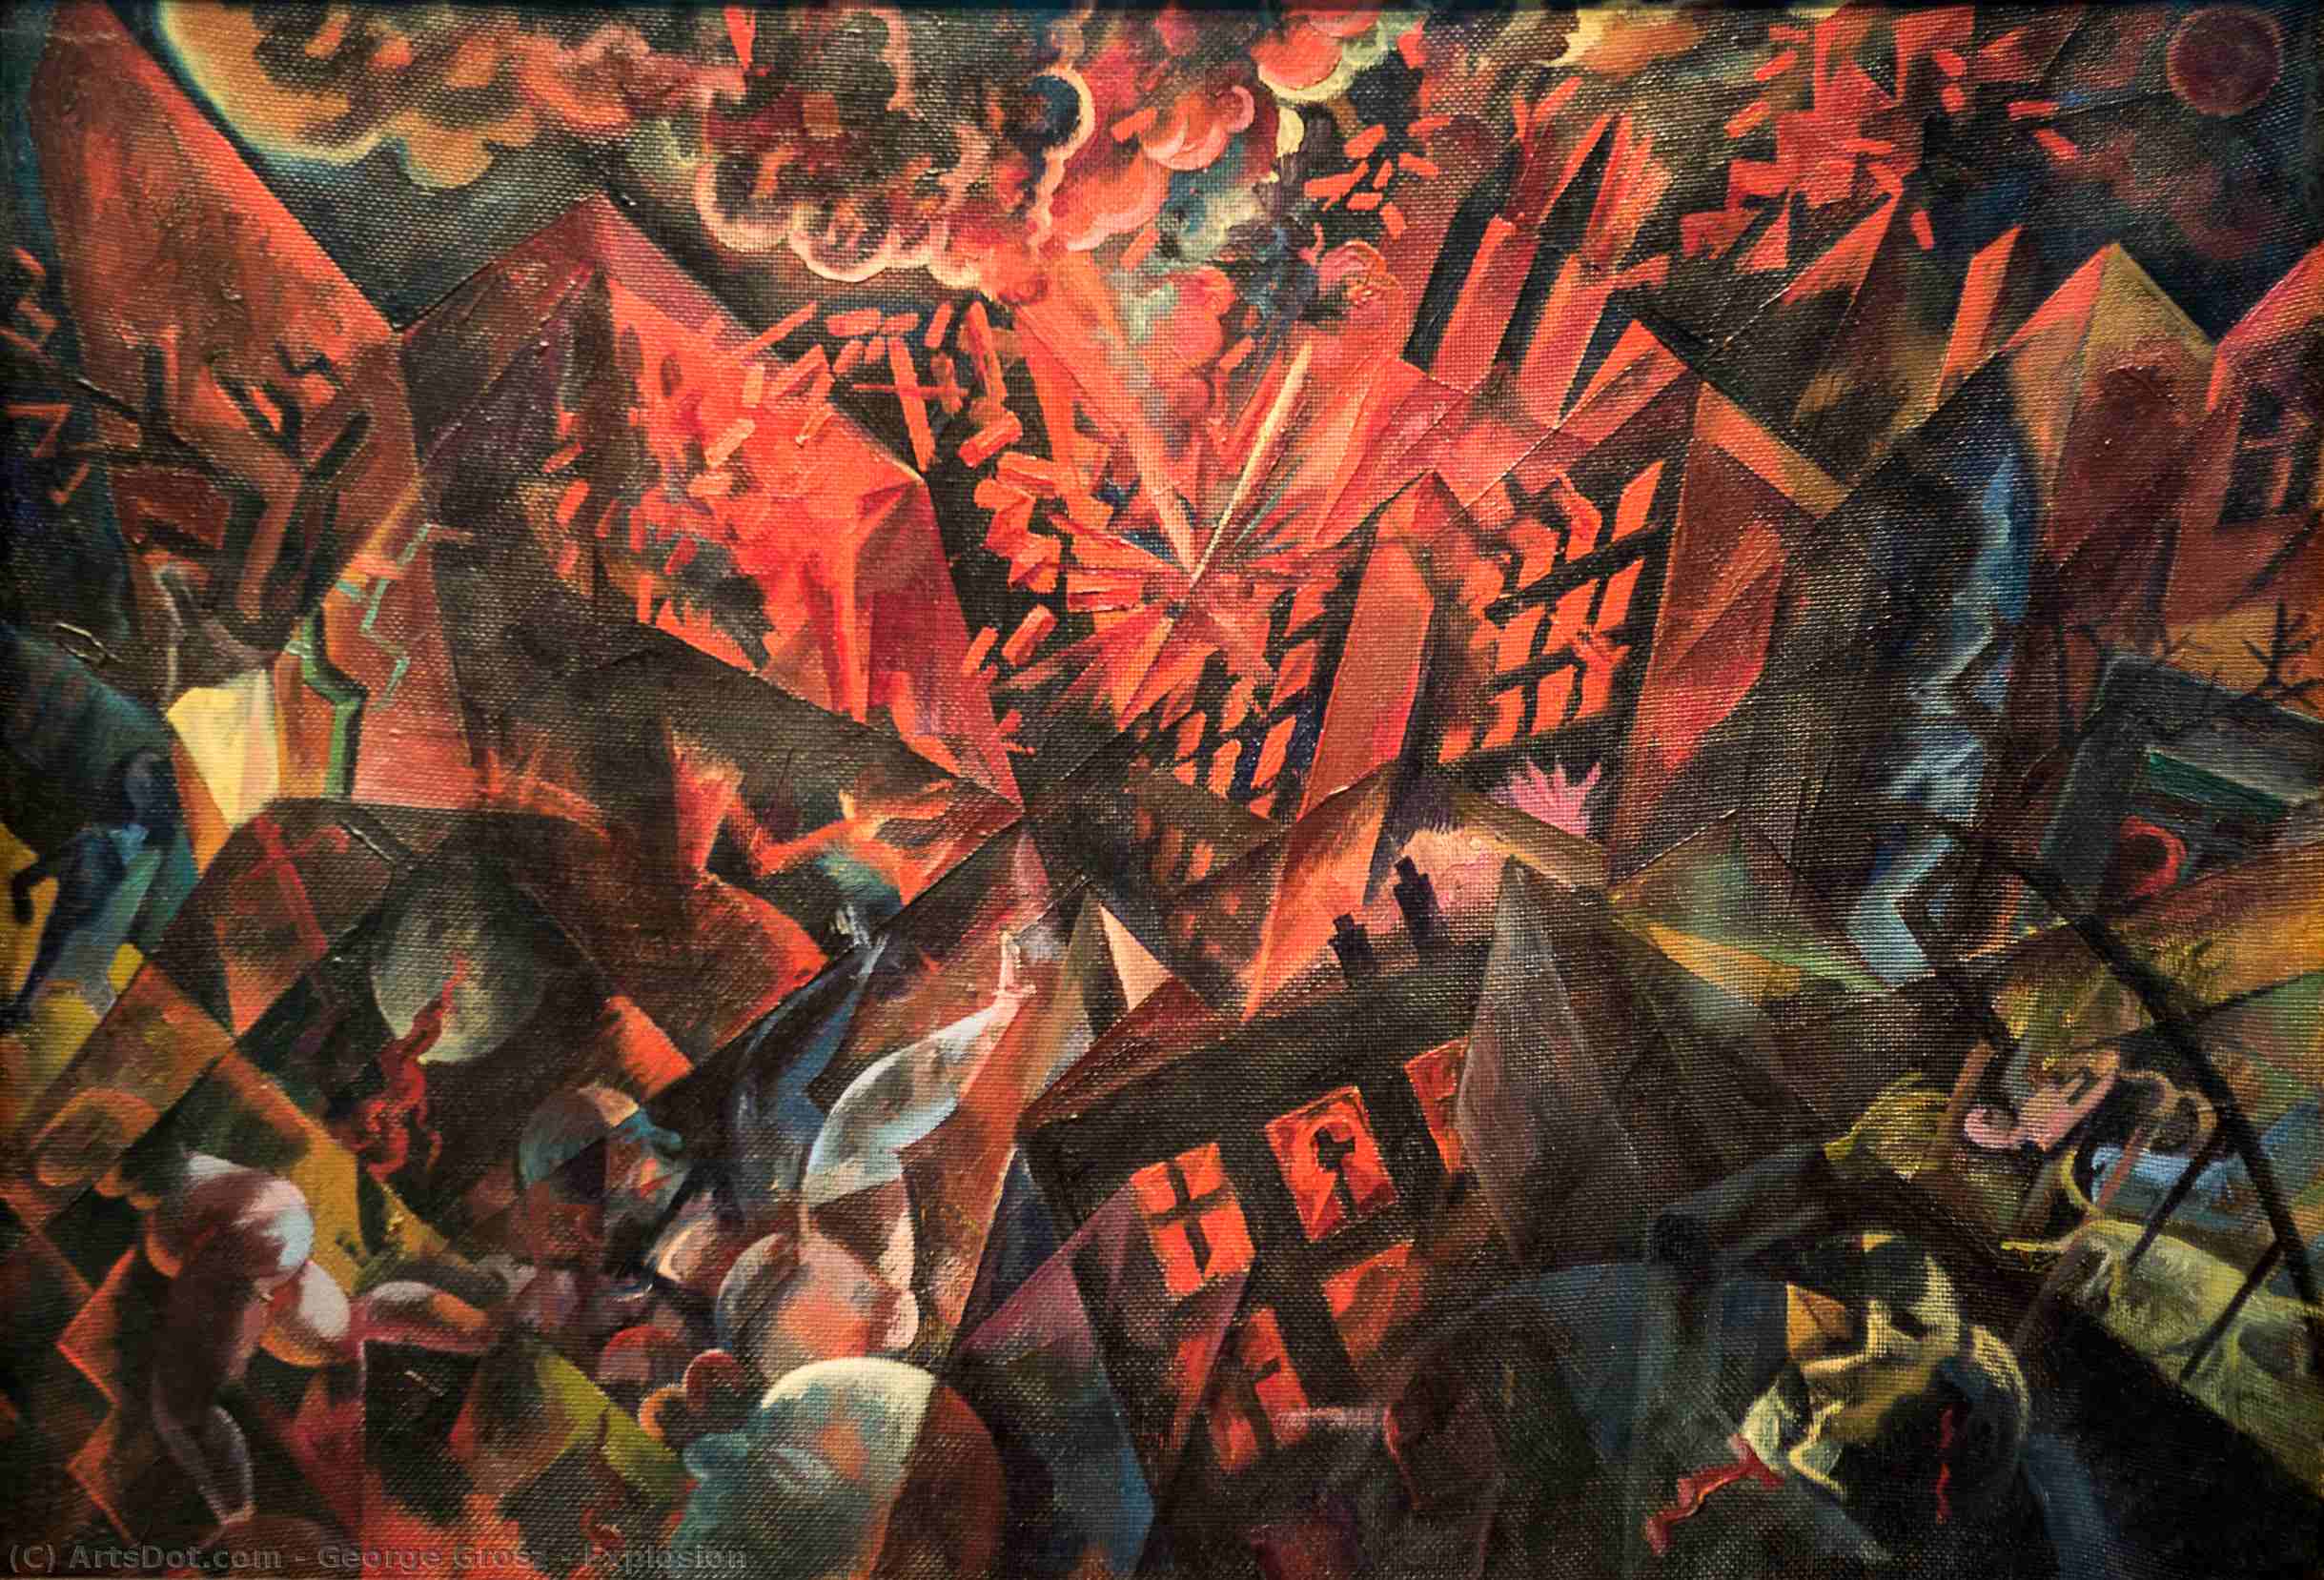 Grosz, G. (1917). Explosion.